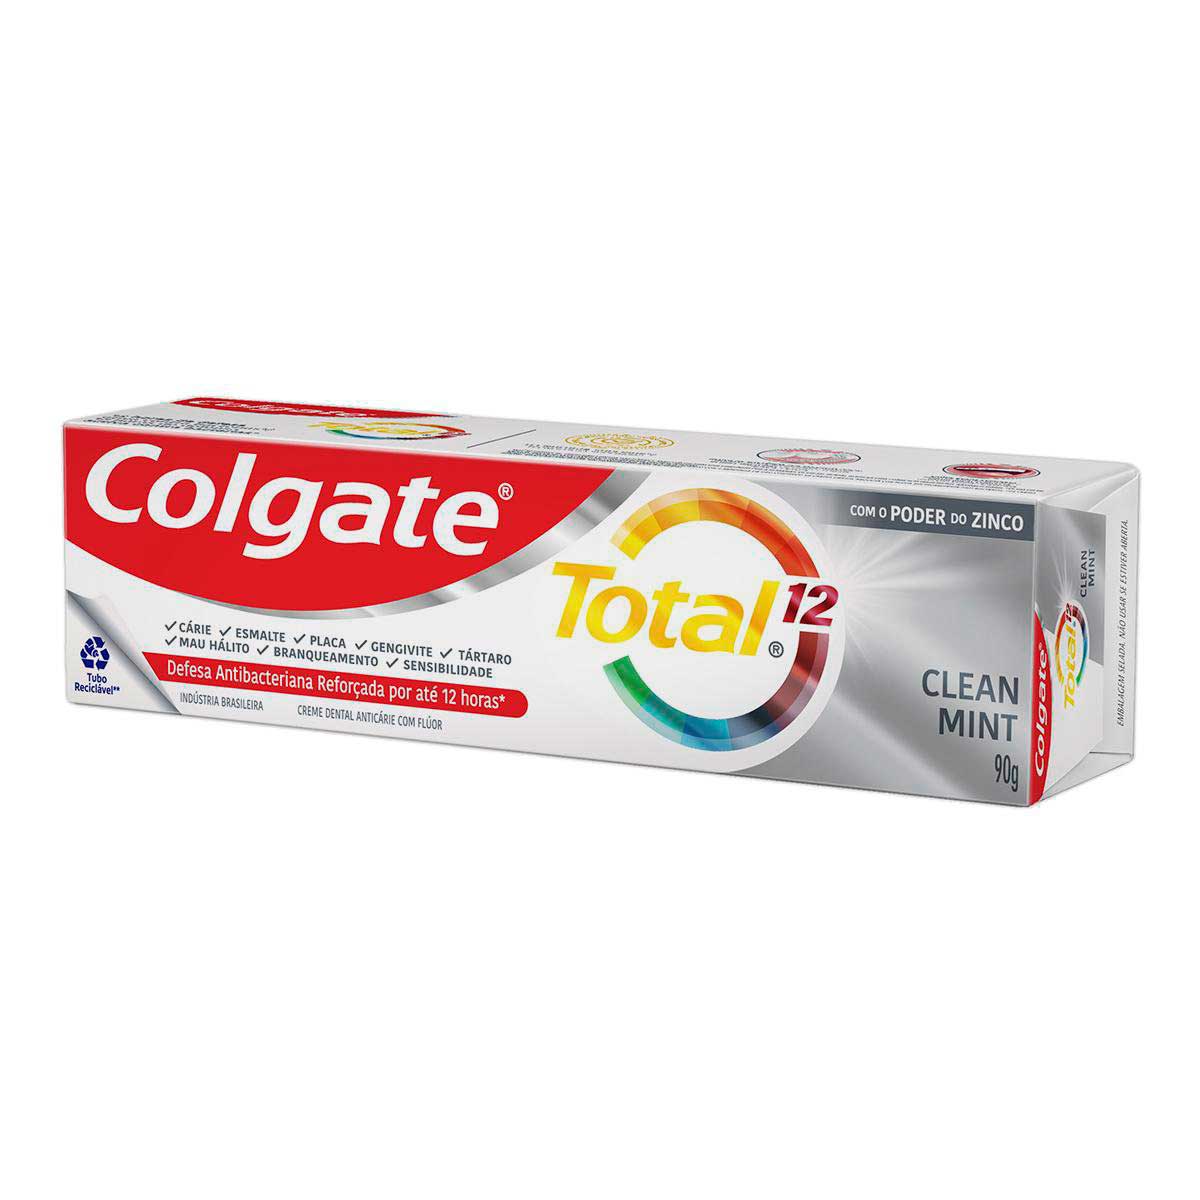 creme-dental-clear-mint-colgate-total-12-90-g-1.jpg